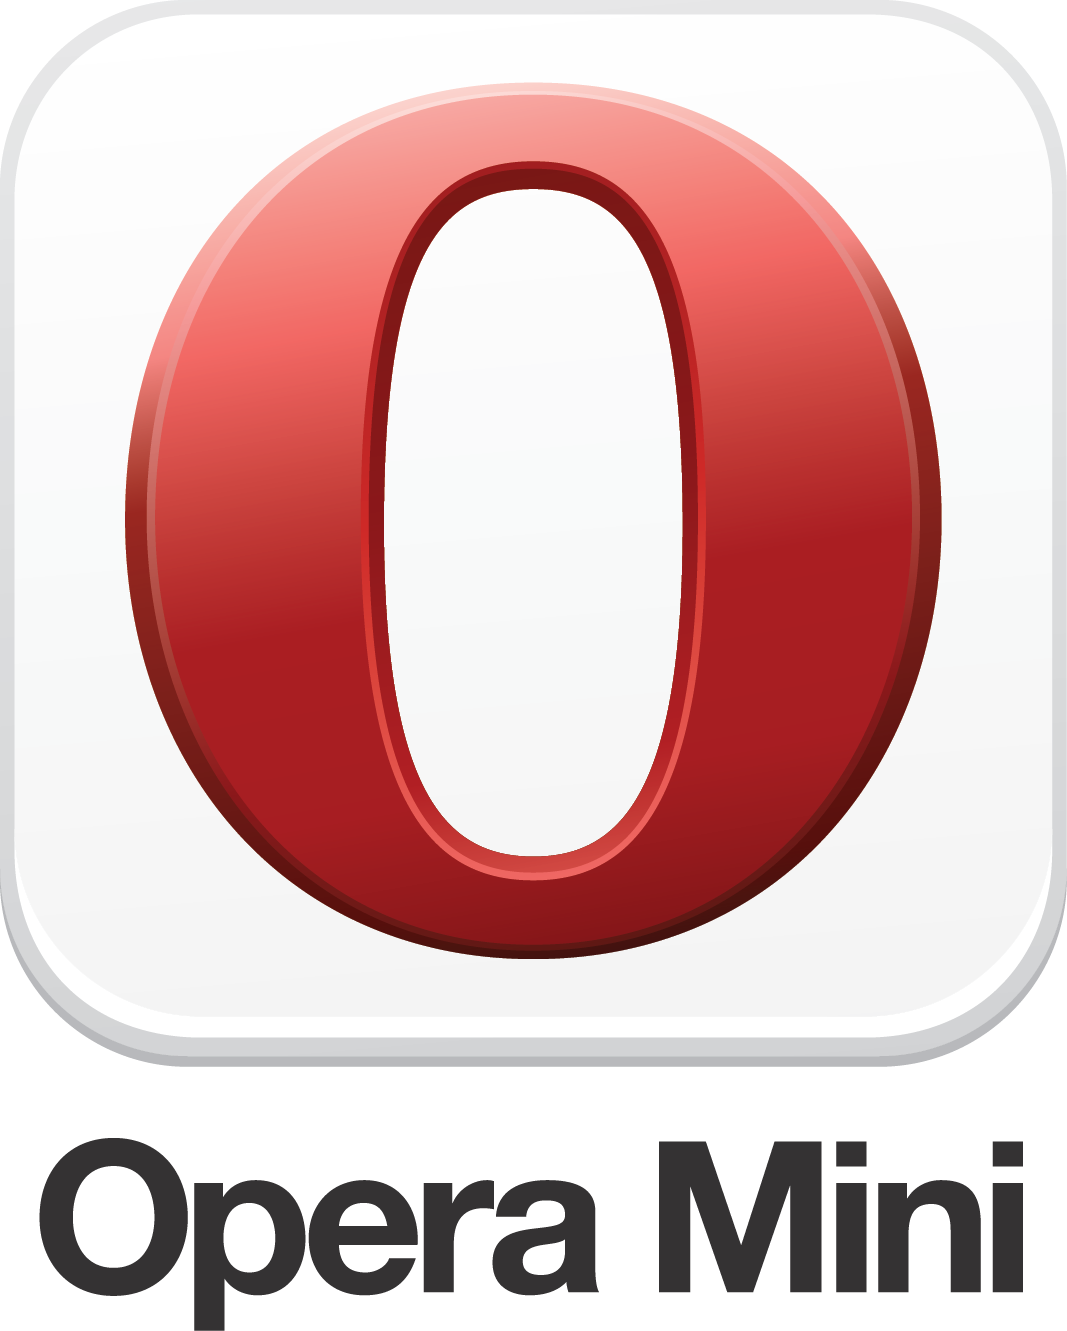 opera mini 8 apk file download